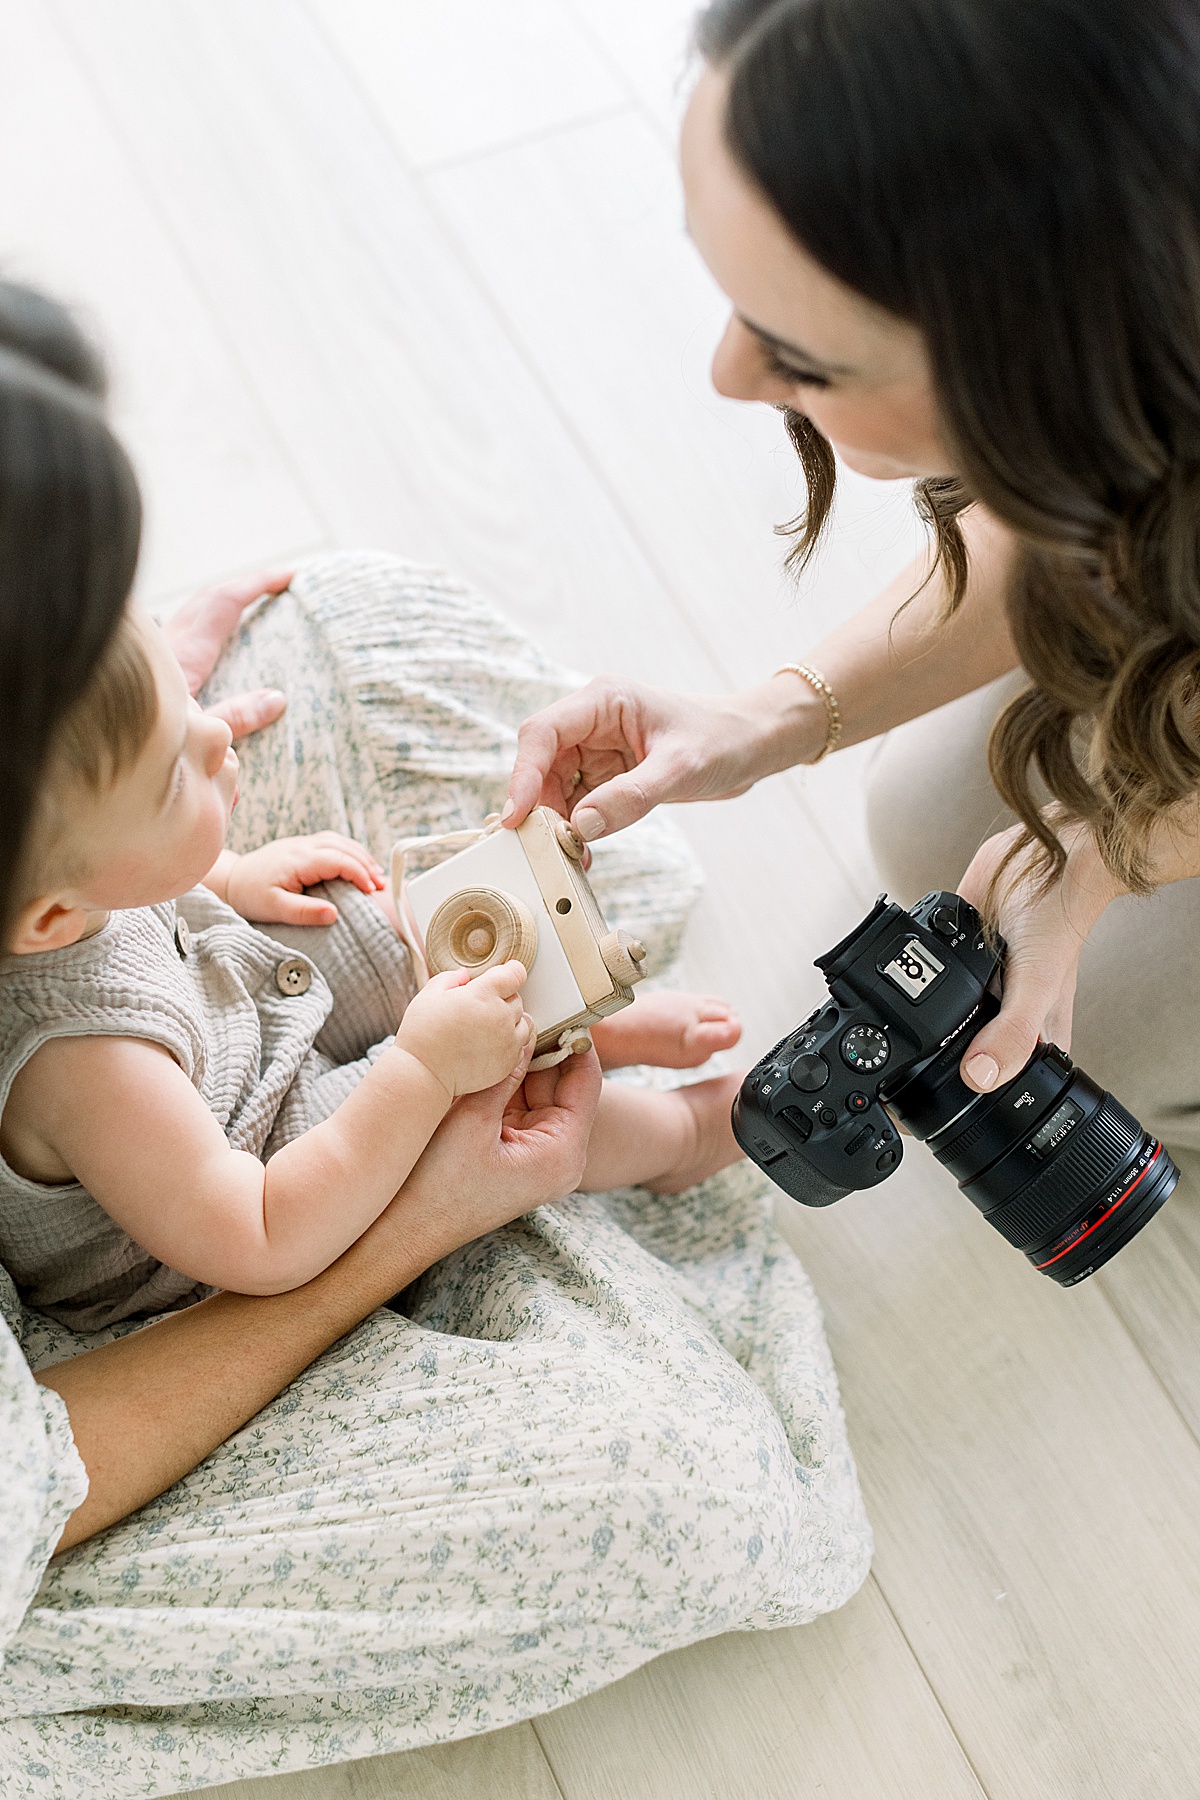 Emily Gerald, Virginia newborn & motherhood photographer | Brand session by Abby Grace Photography